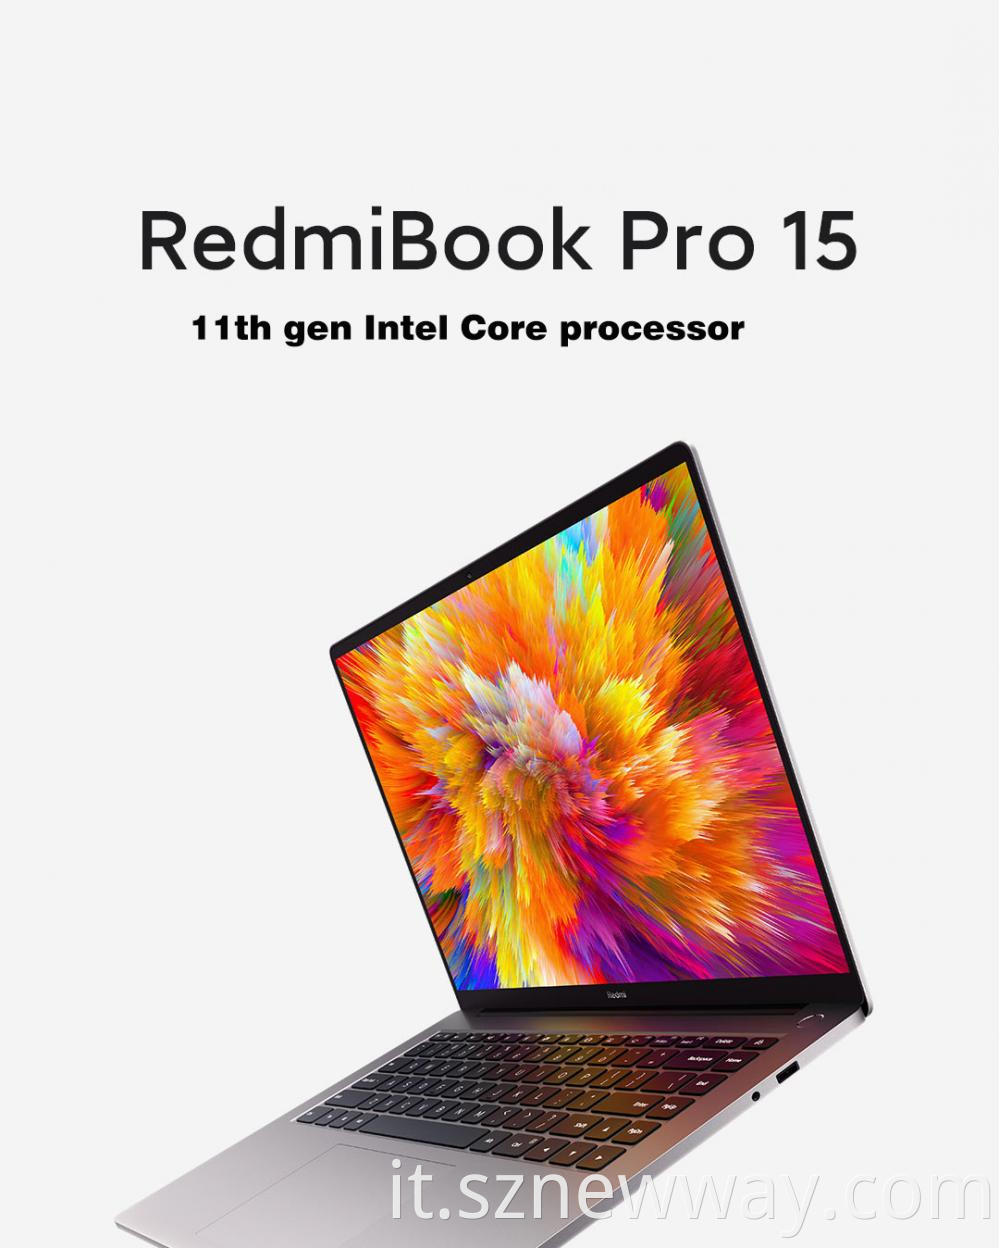 Redmibook Pro 15